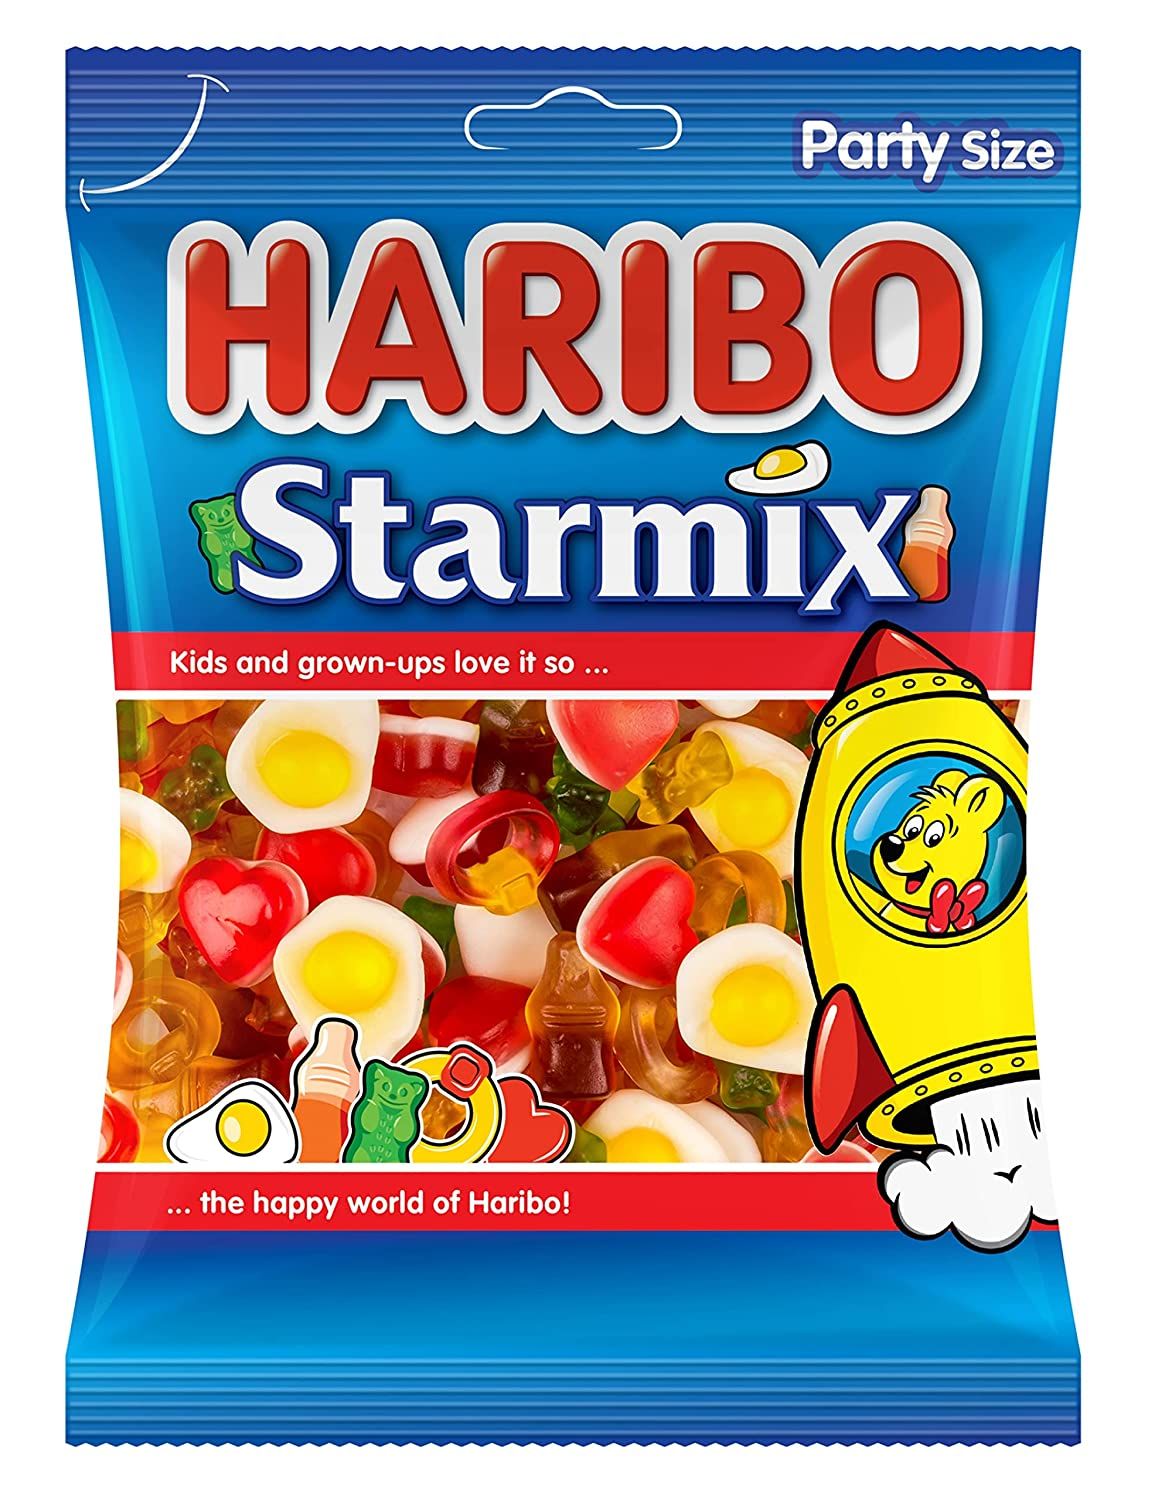 Haribo Starmix Jelly Beans Image